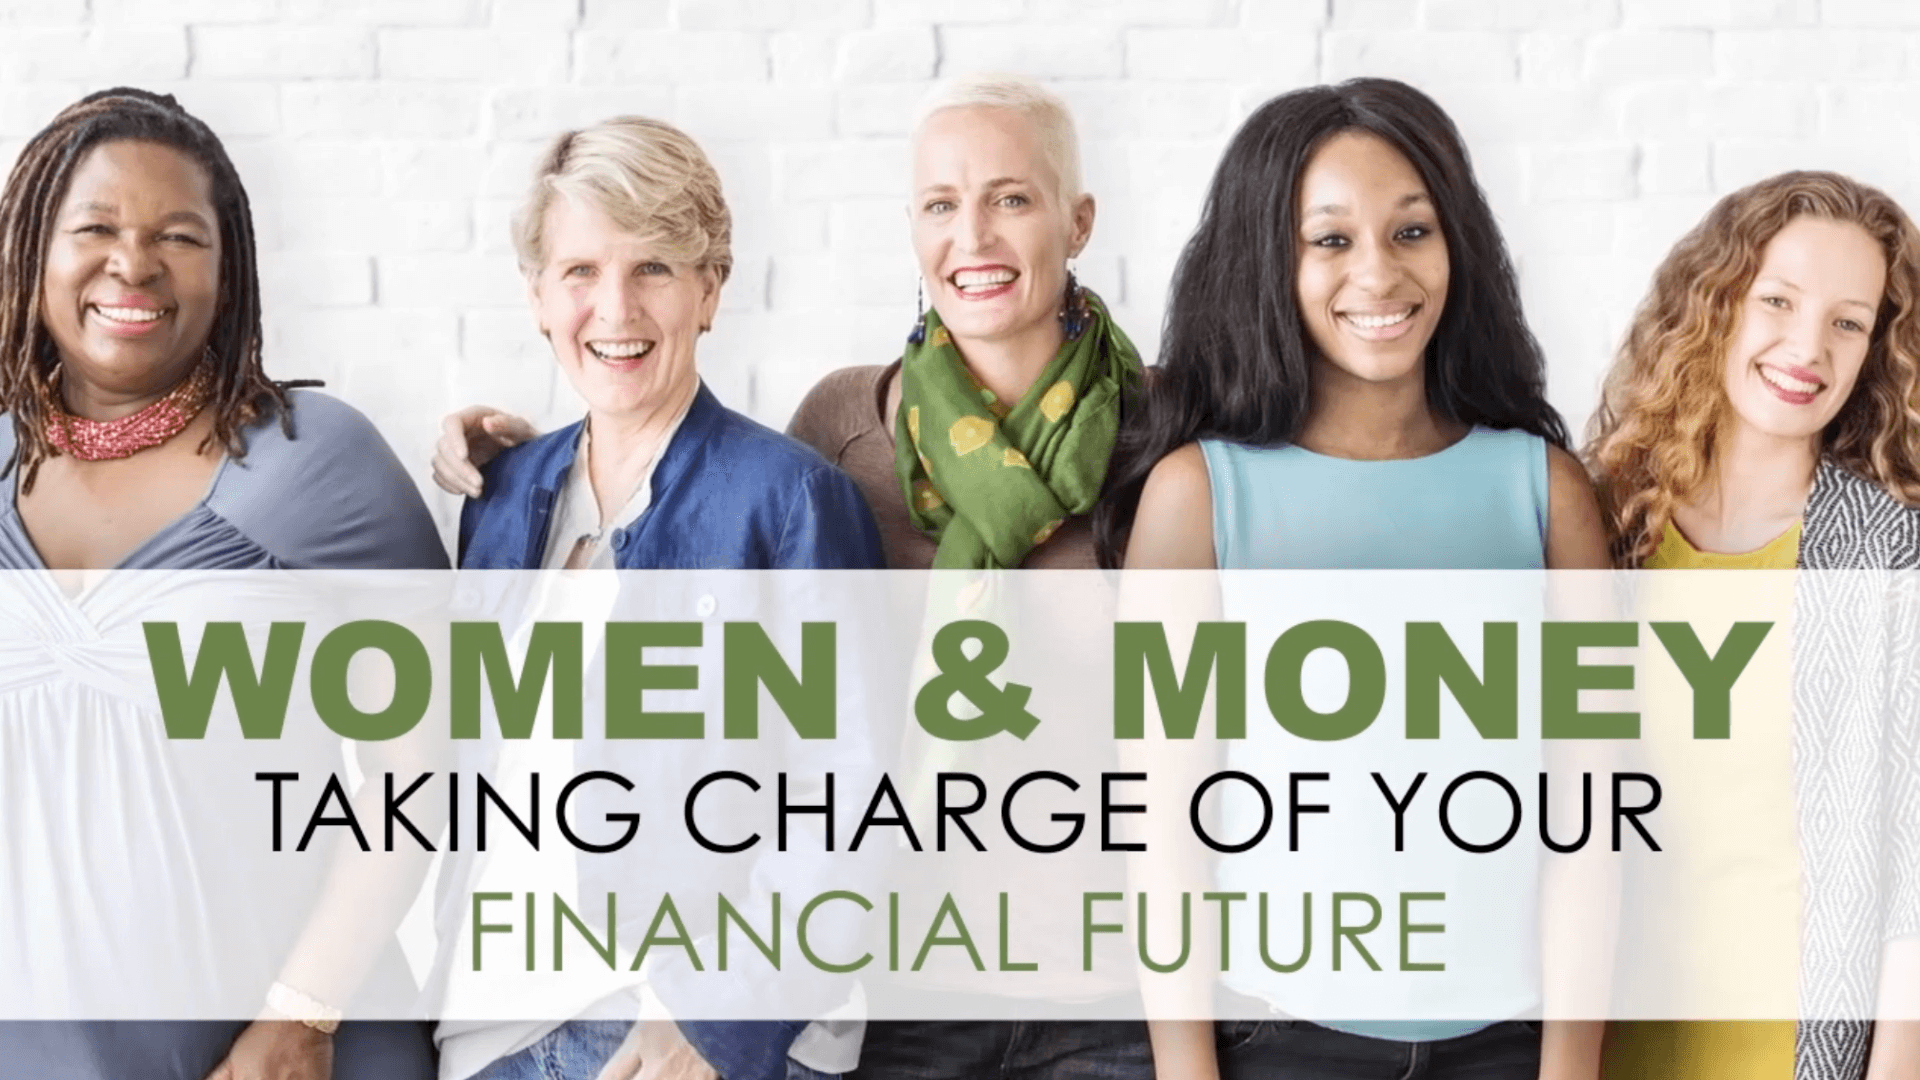 Women & retirement planning